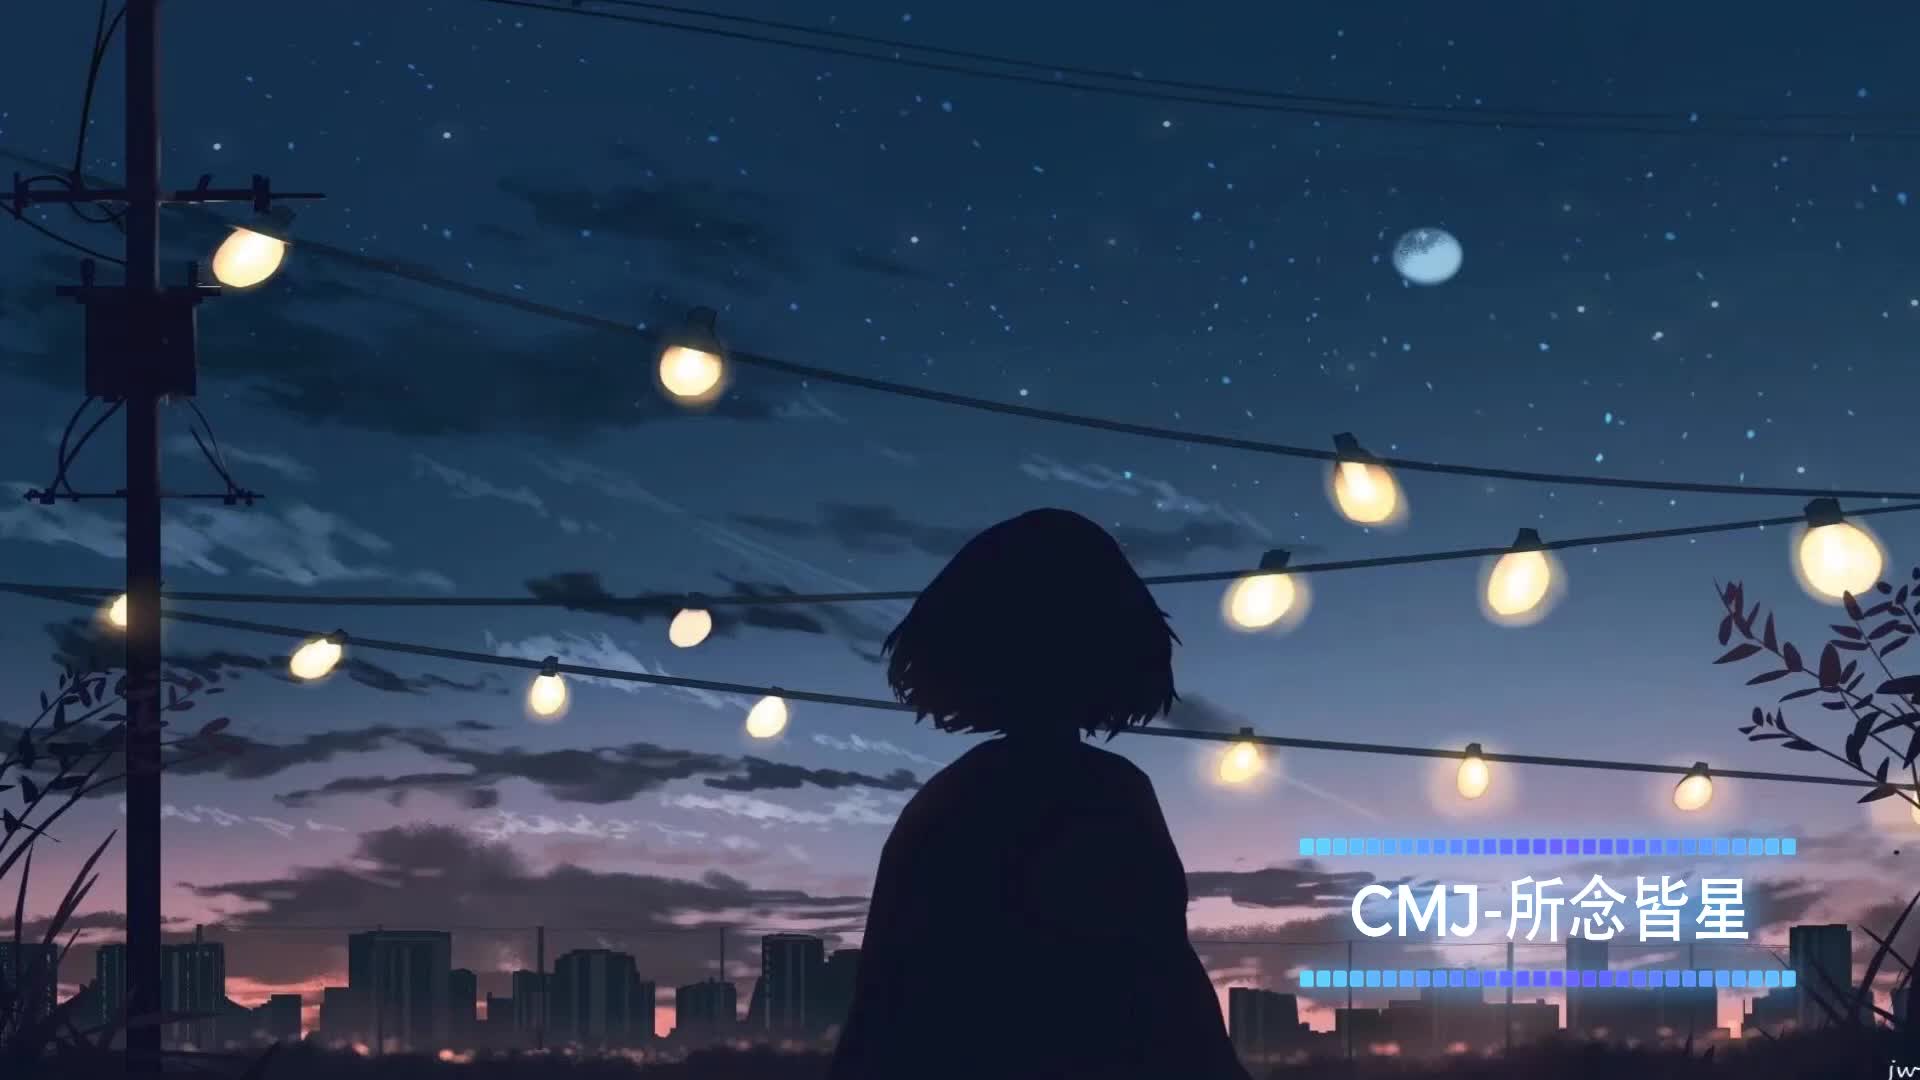 CMJ-所念皆星河 【纯音乐_轻音乐】